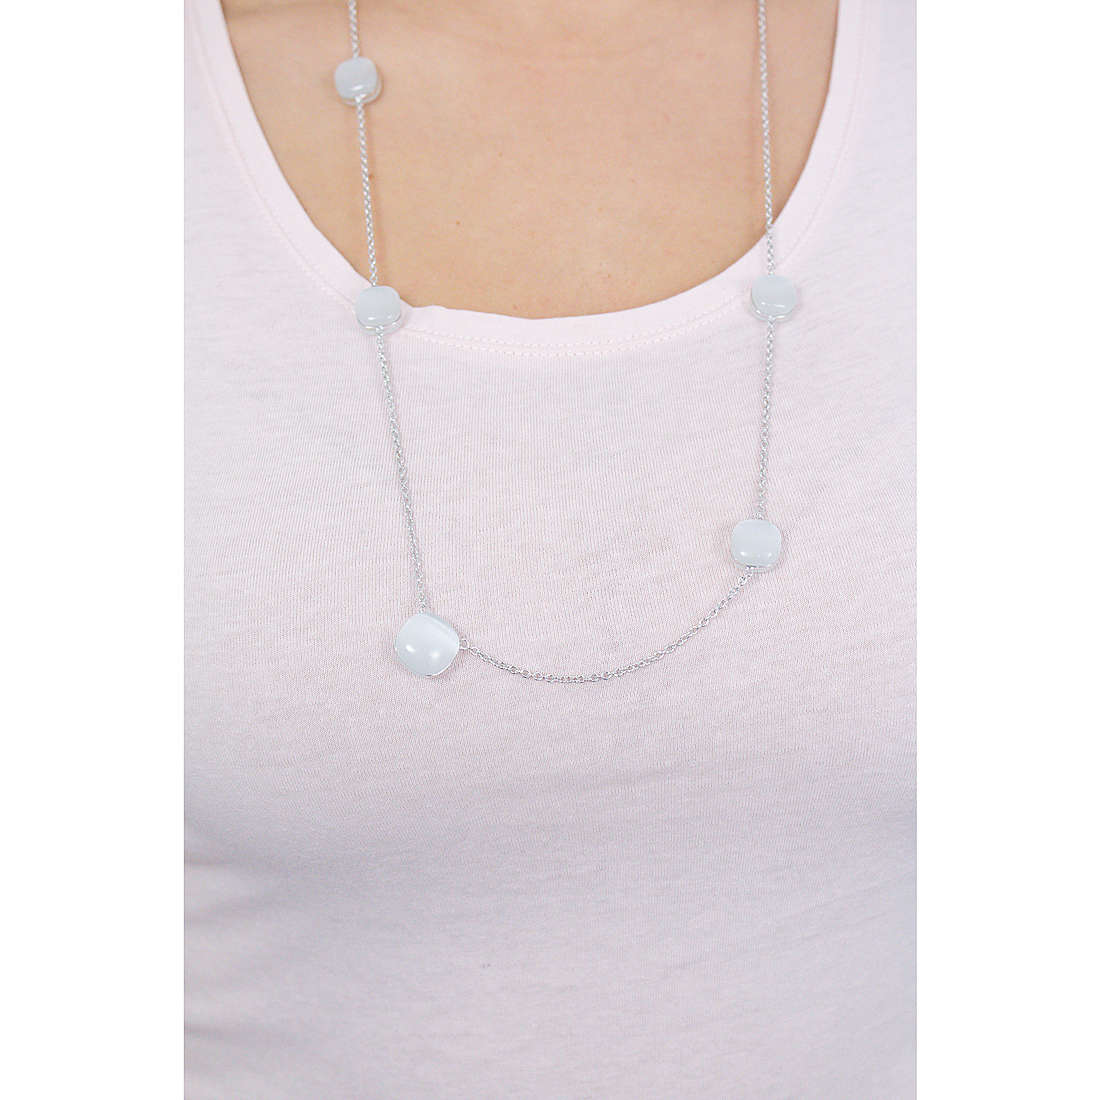 Morellato necklaces Gemma woman SAKK17 wearing